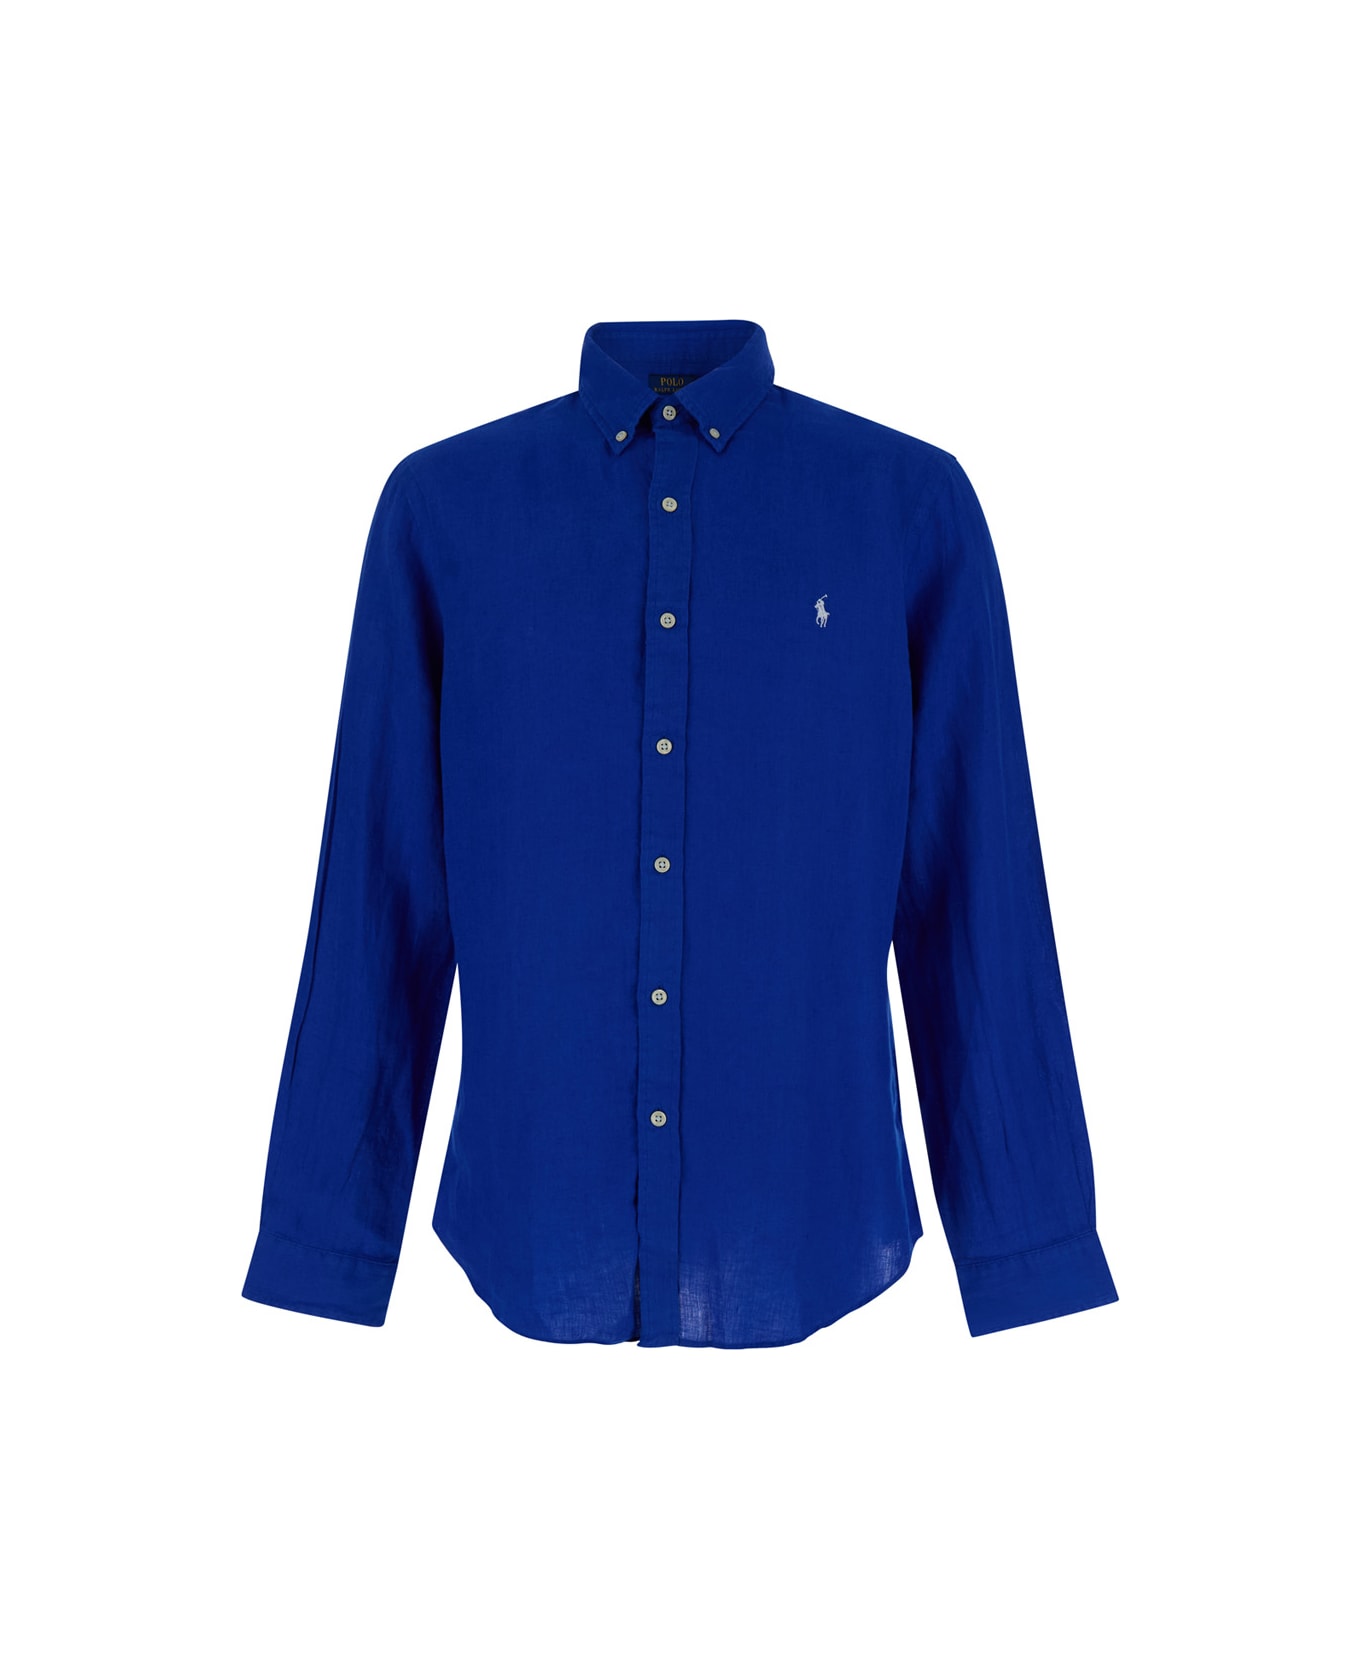 Polo Ralph Lauren Linen Shirt With Pony Logo - Blue シャツ